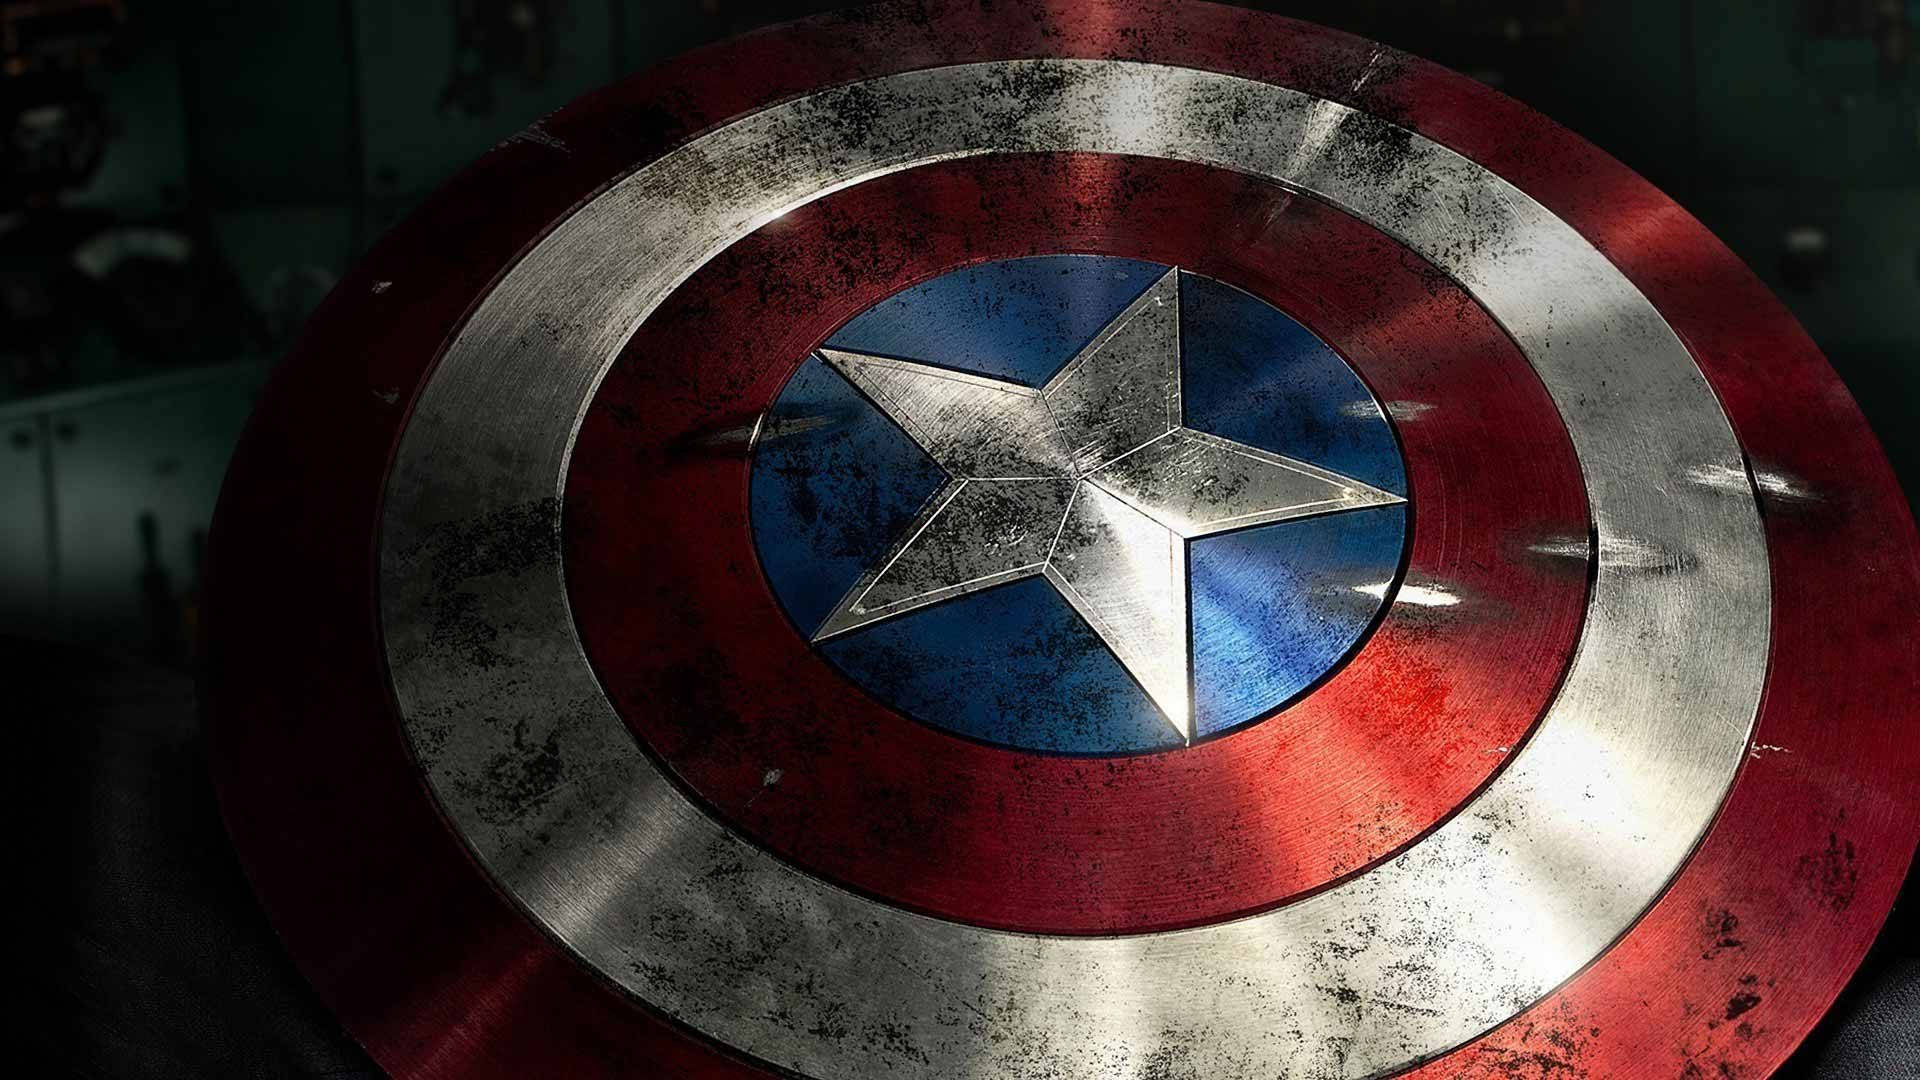 Free Captain America Wallpaper Downloads, [300+] Captain America Wallpapers  for FREE 